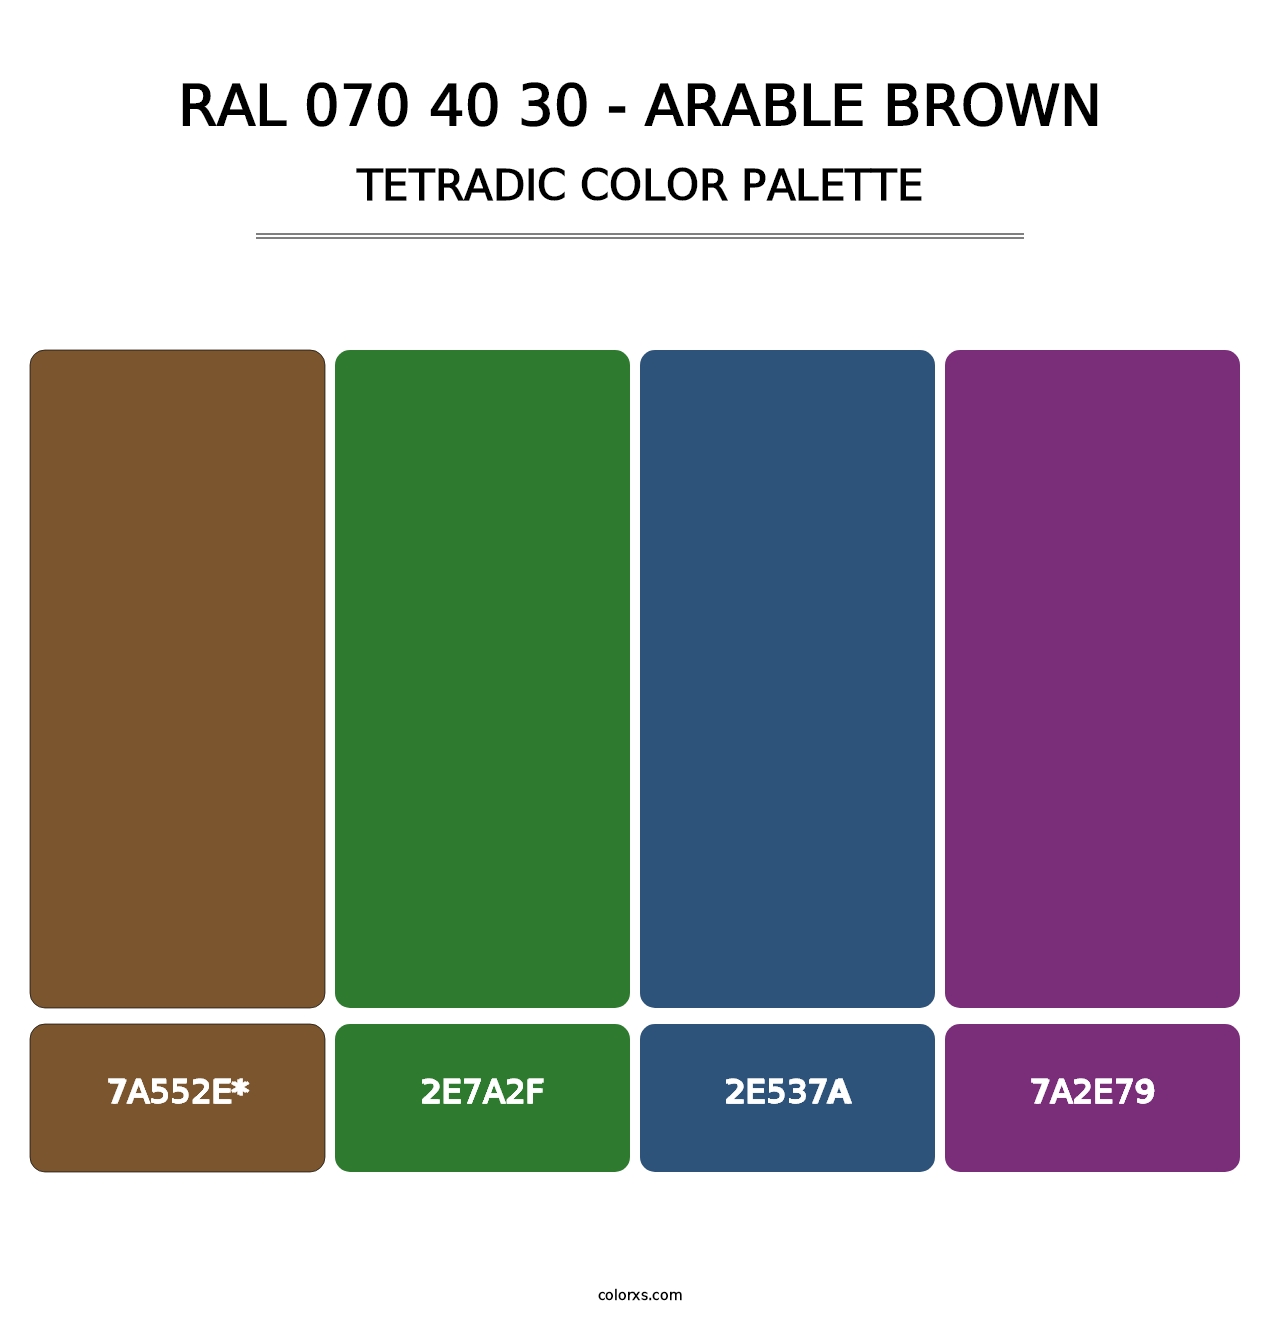 RAL 070 40 30 - Arable Brown - Tetradic Color Palette